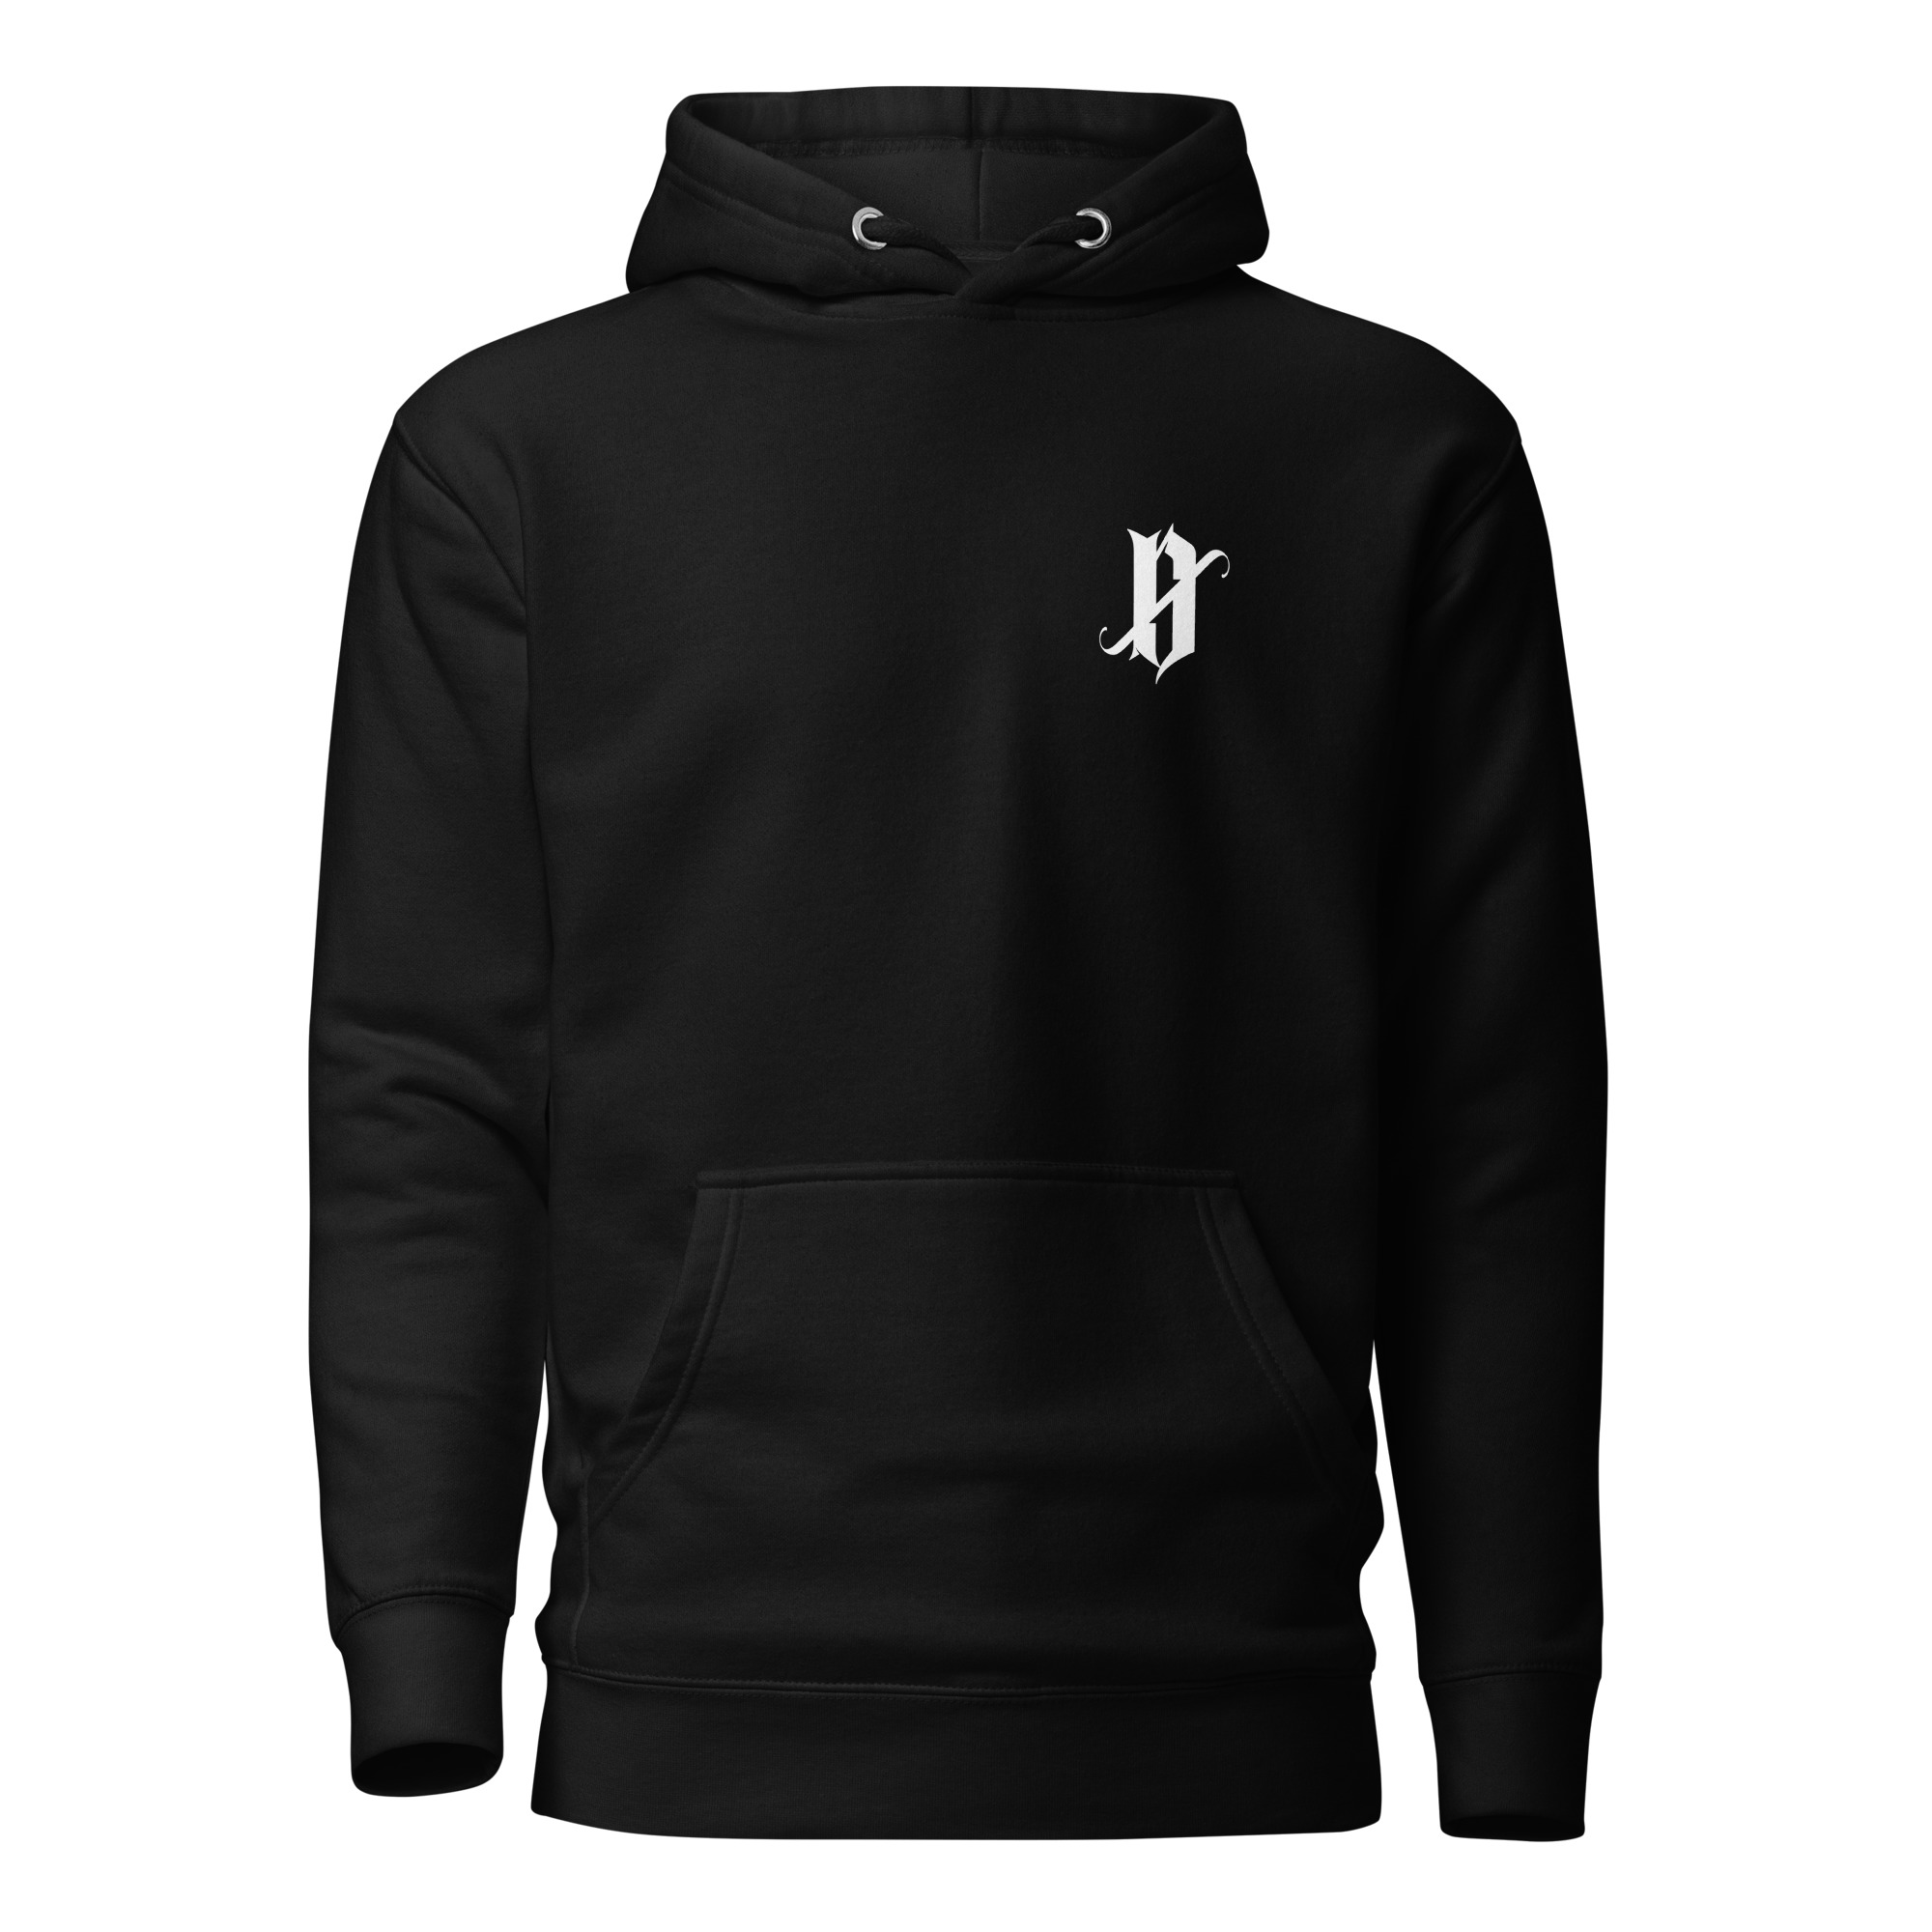 unisex-premium-hoodie-black-front-65afcf884a6d4.jpg